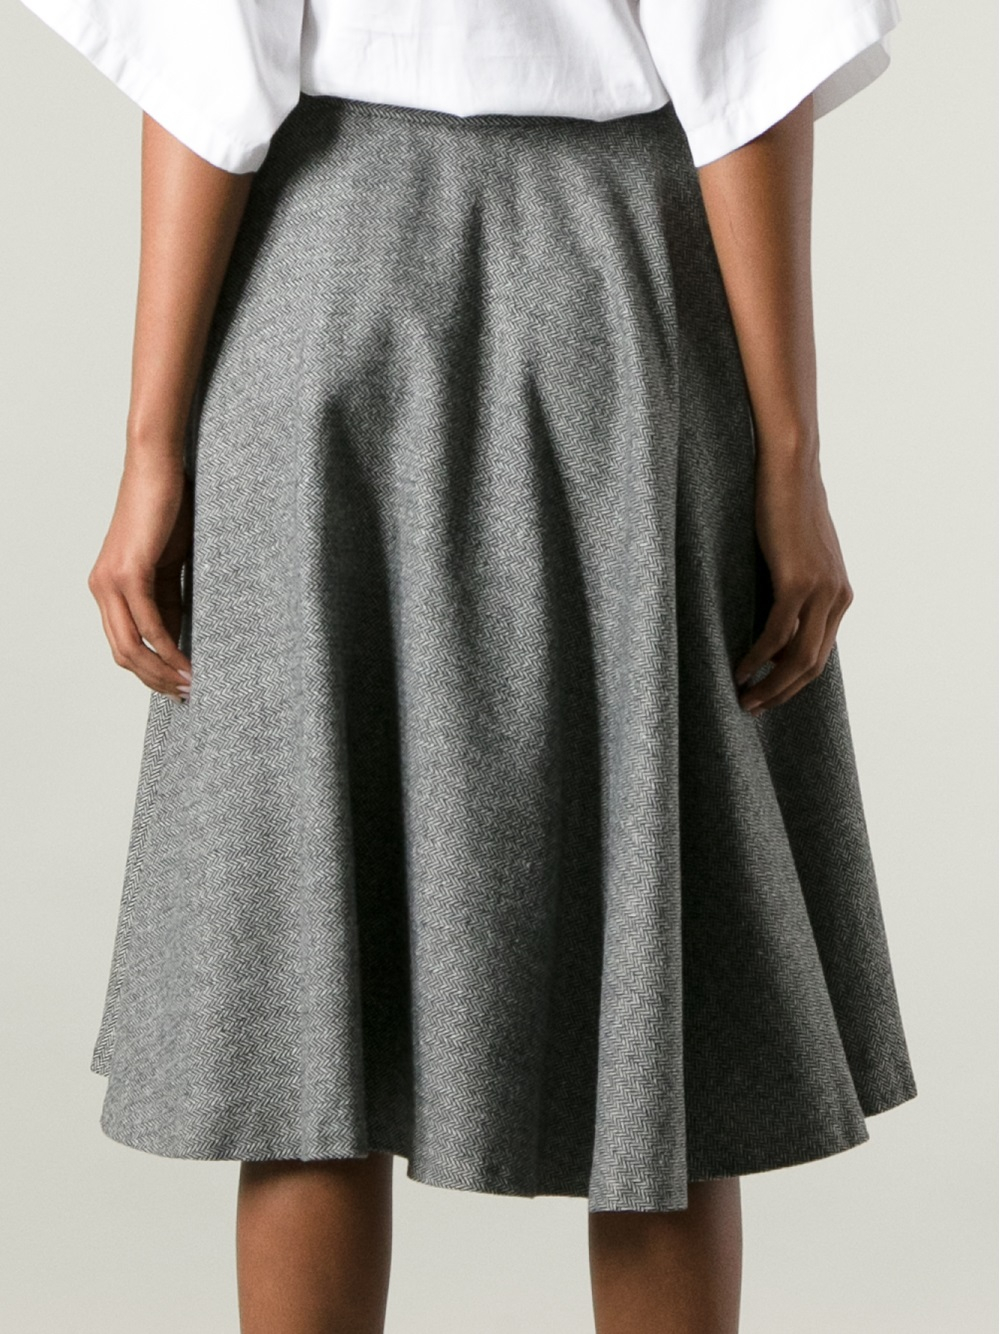 Msgm Herringbone Aline Skirt in Gray | Lyst